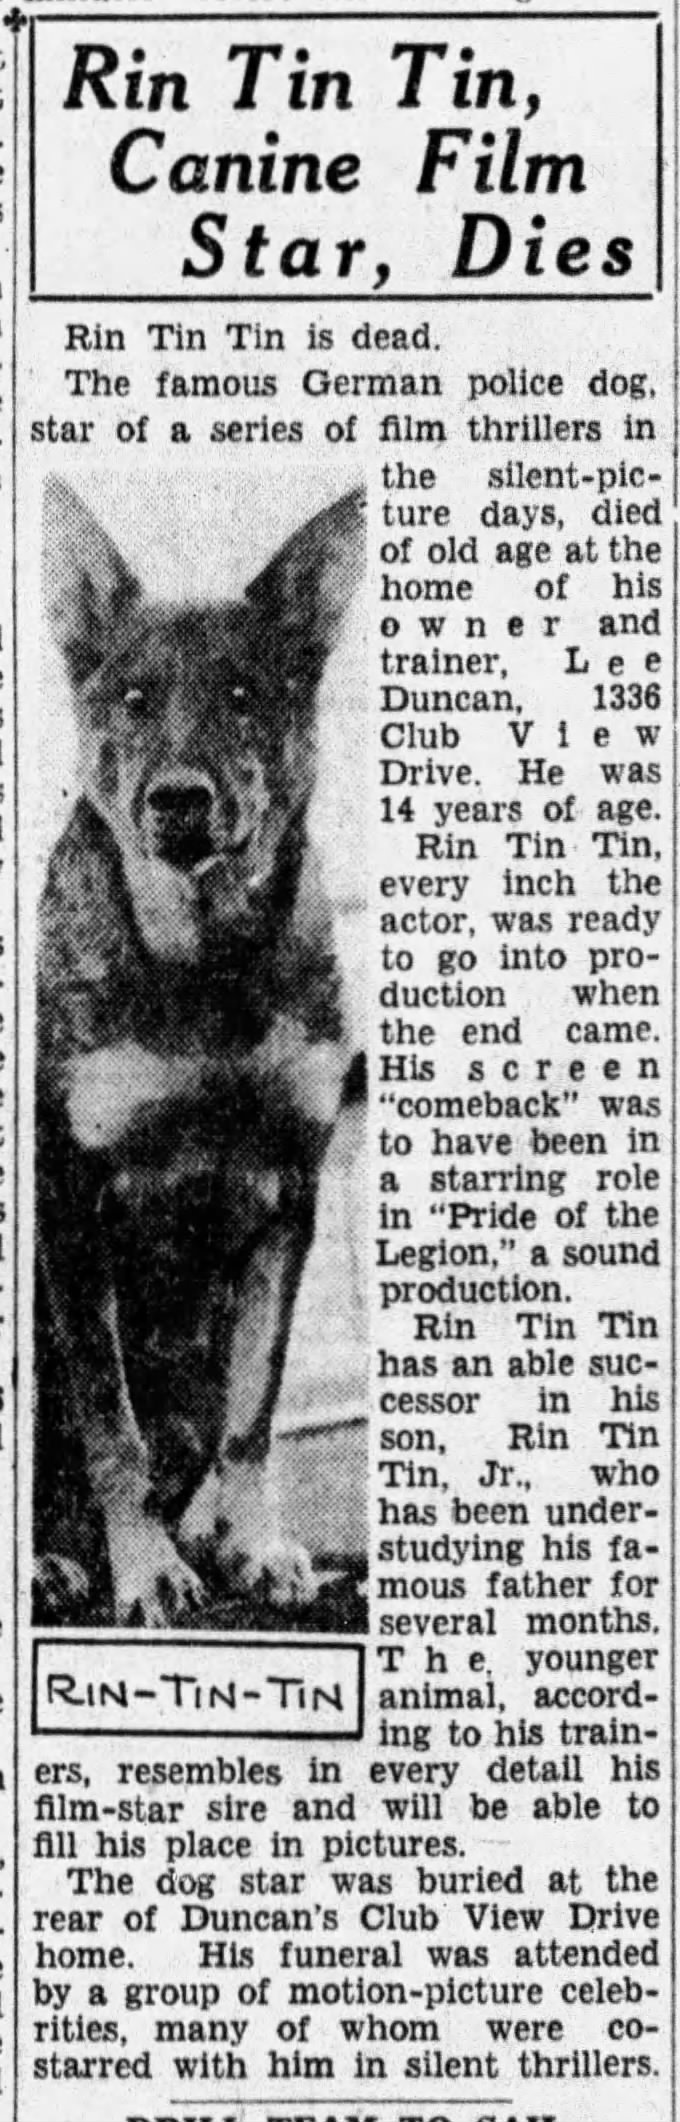 Death announcement for Rin Tin Tin Senior.